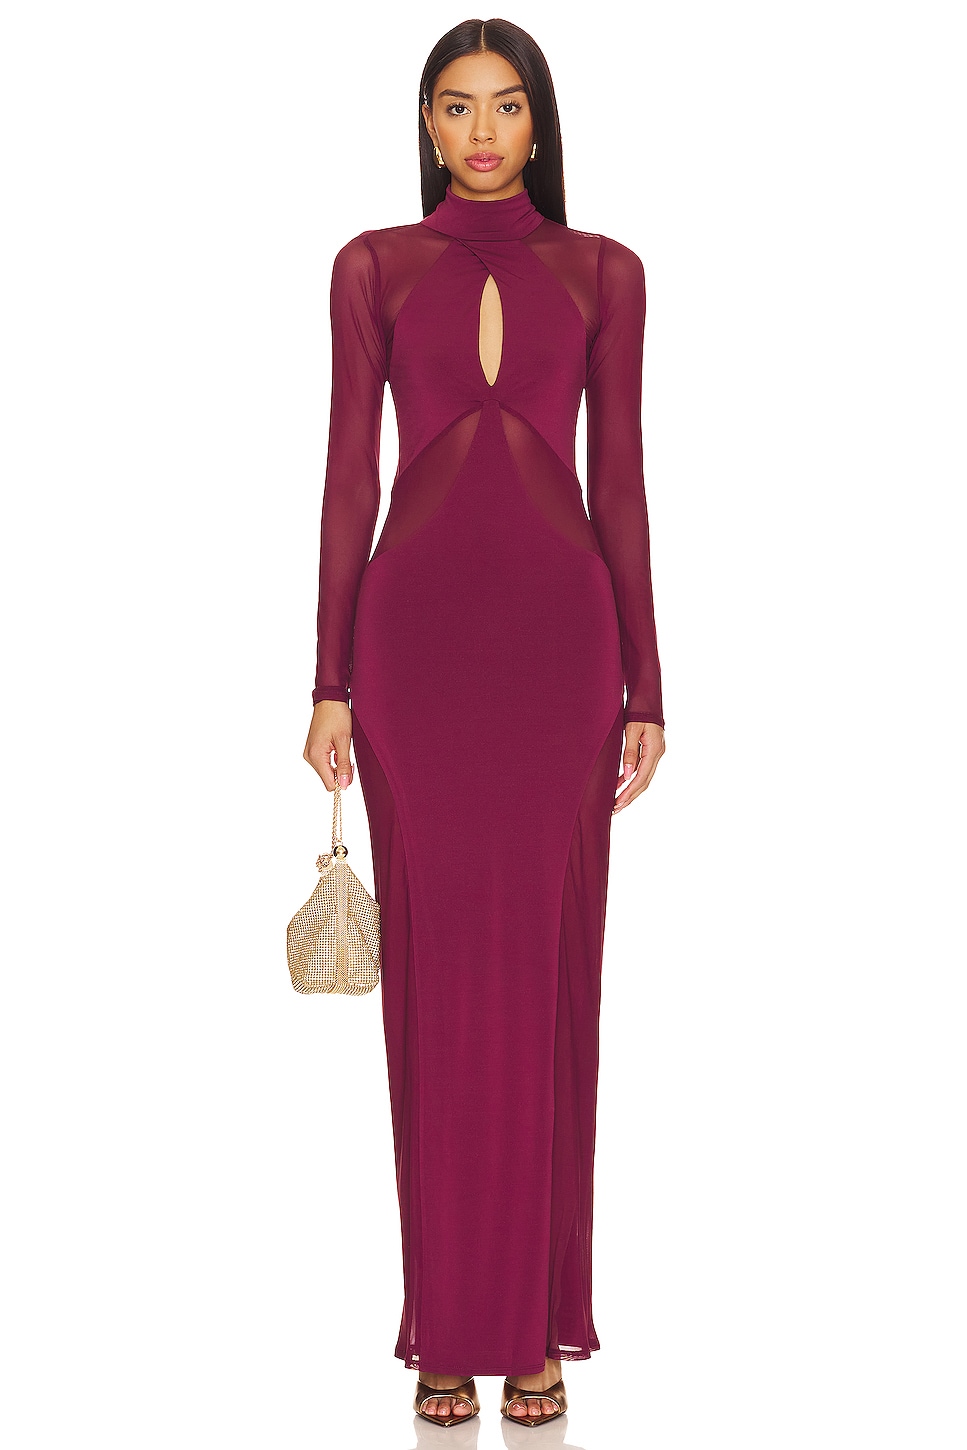 AFRM Rosalia Maxi Dress in Fig | REVOLVE